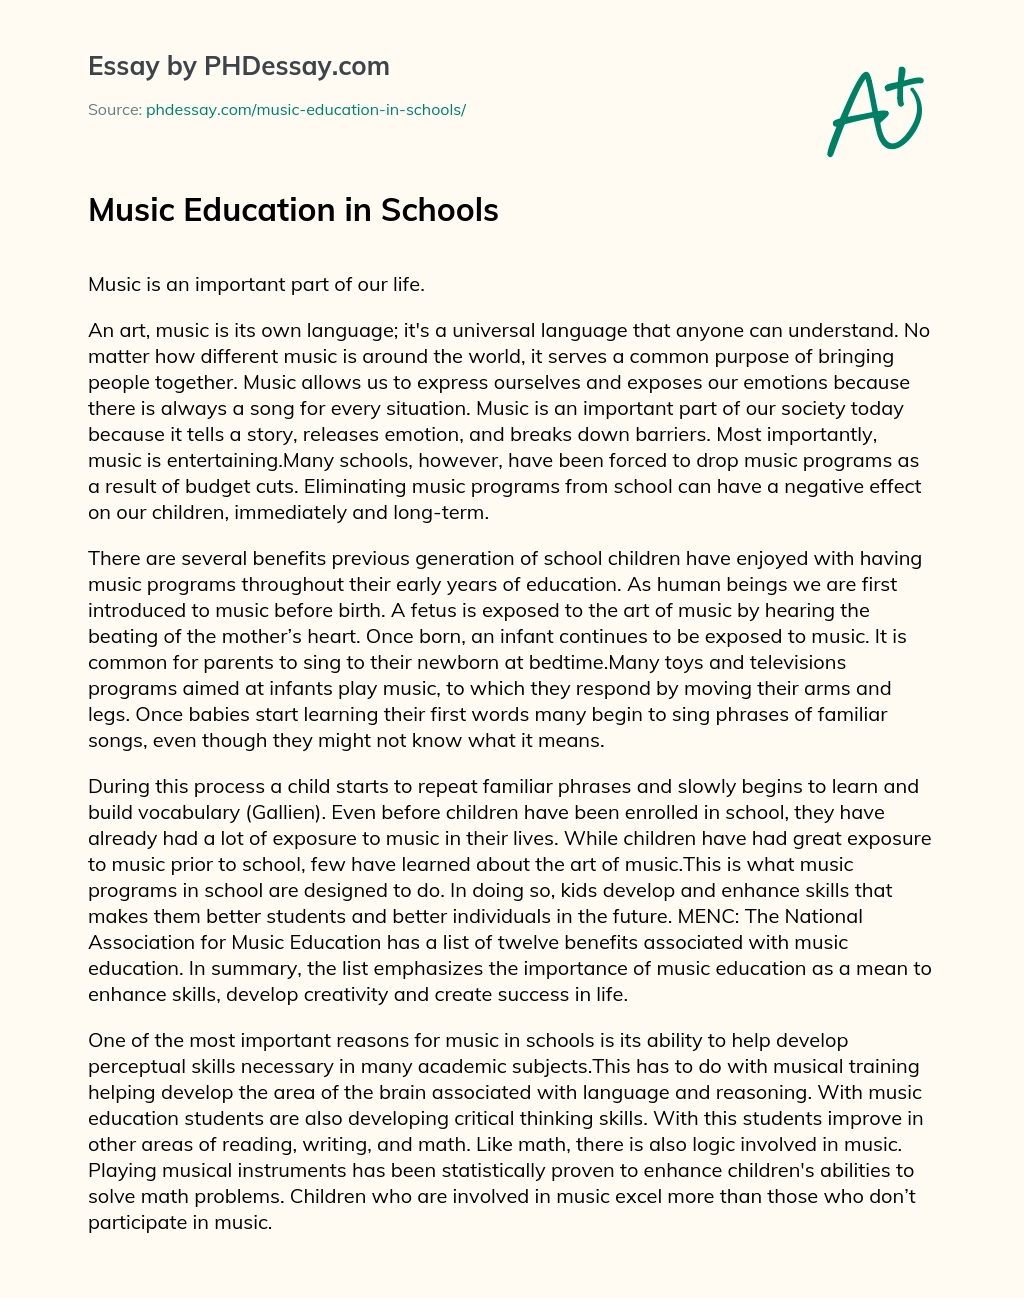 Music Education in Schools essay